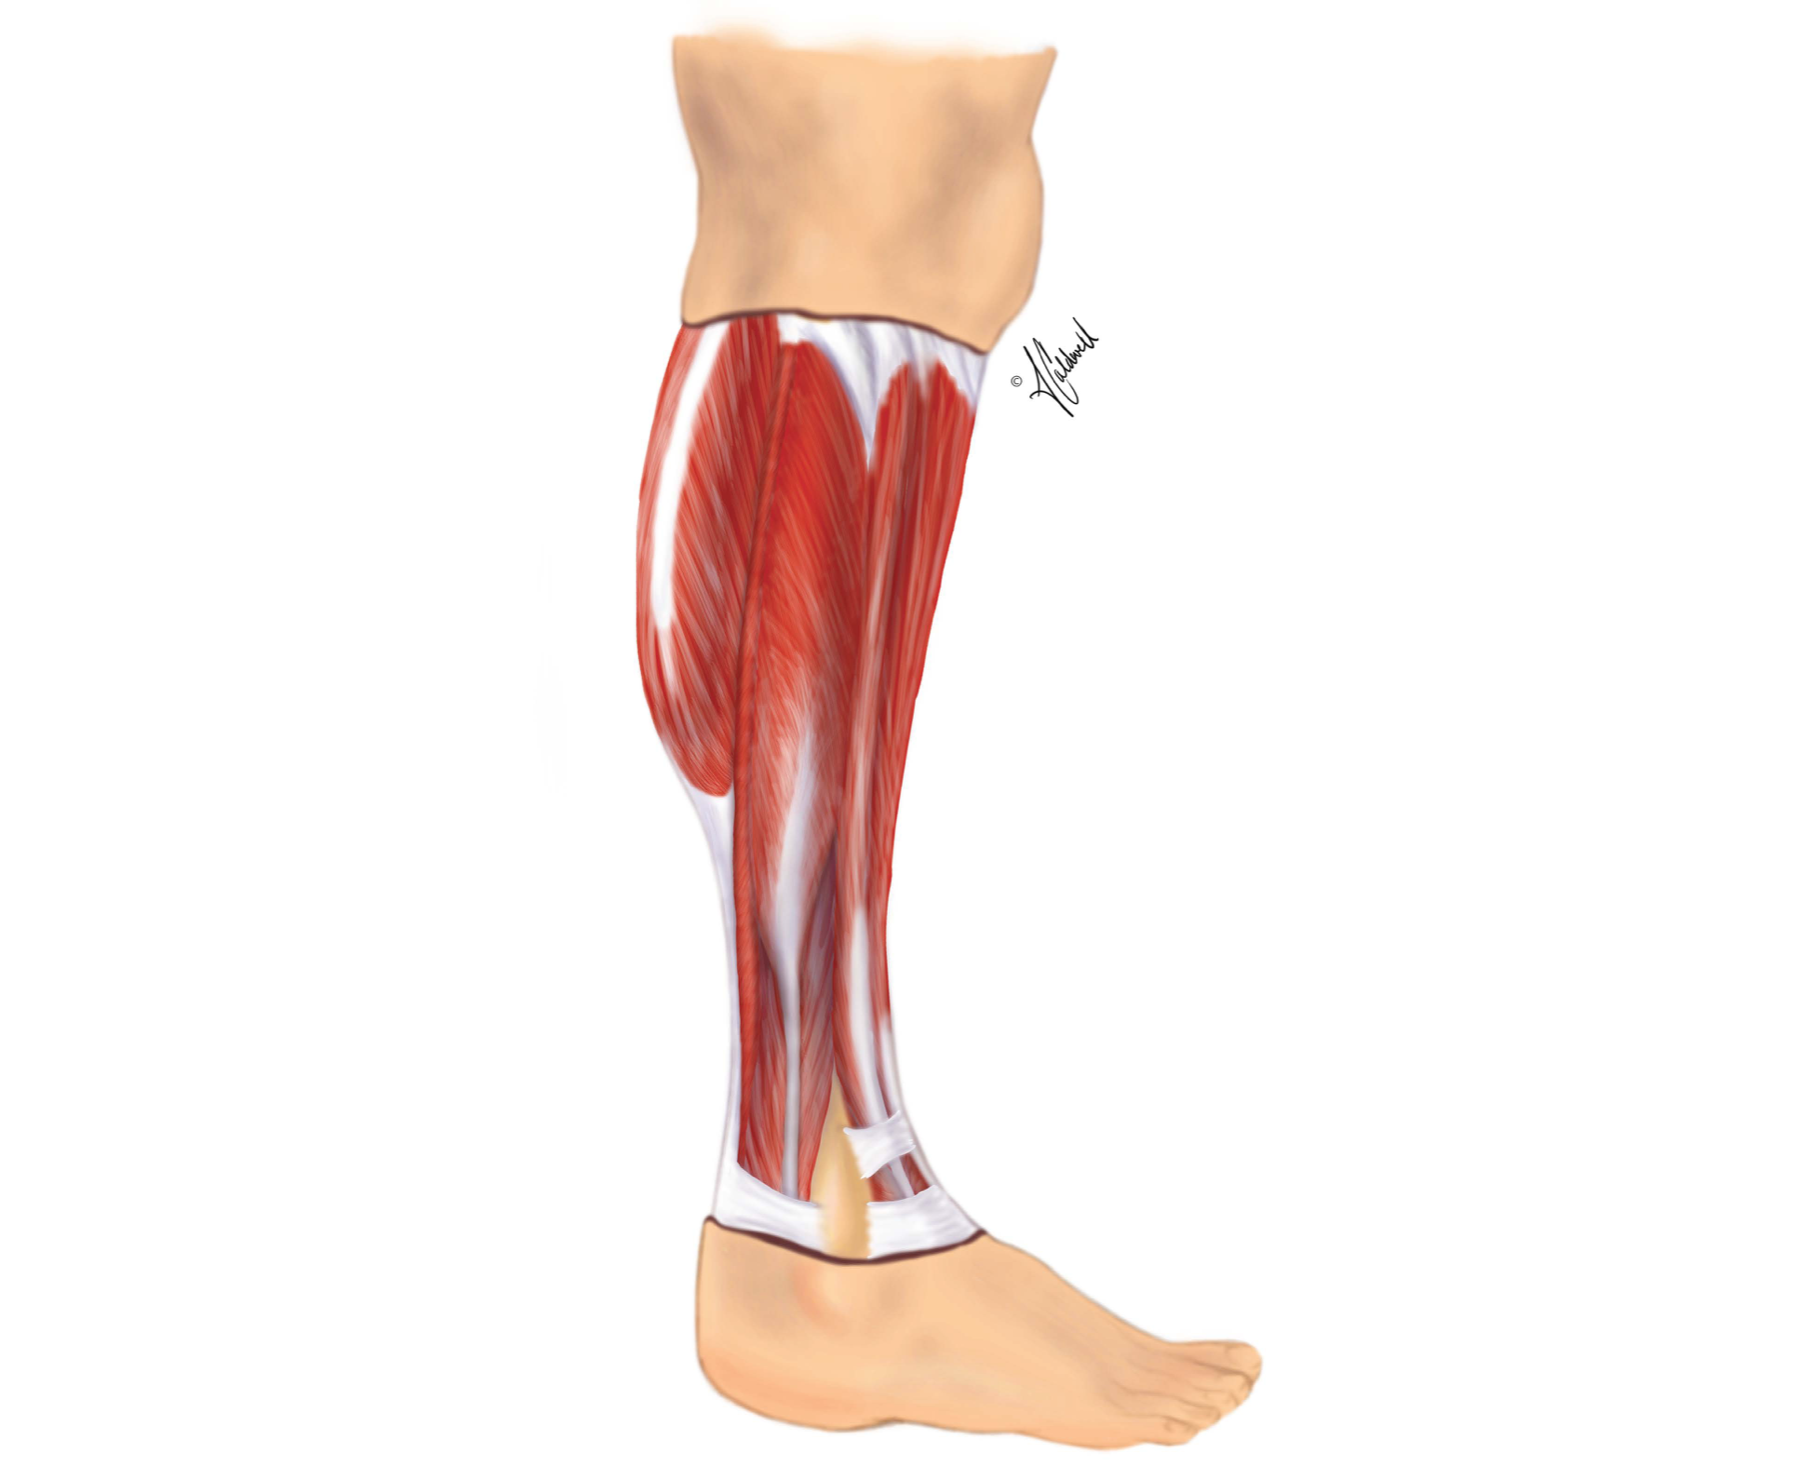 Anatomy of Lower Leg